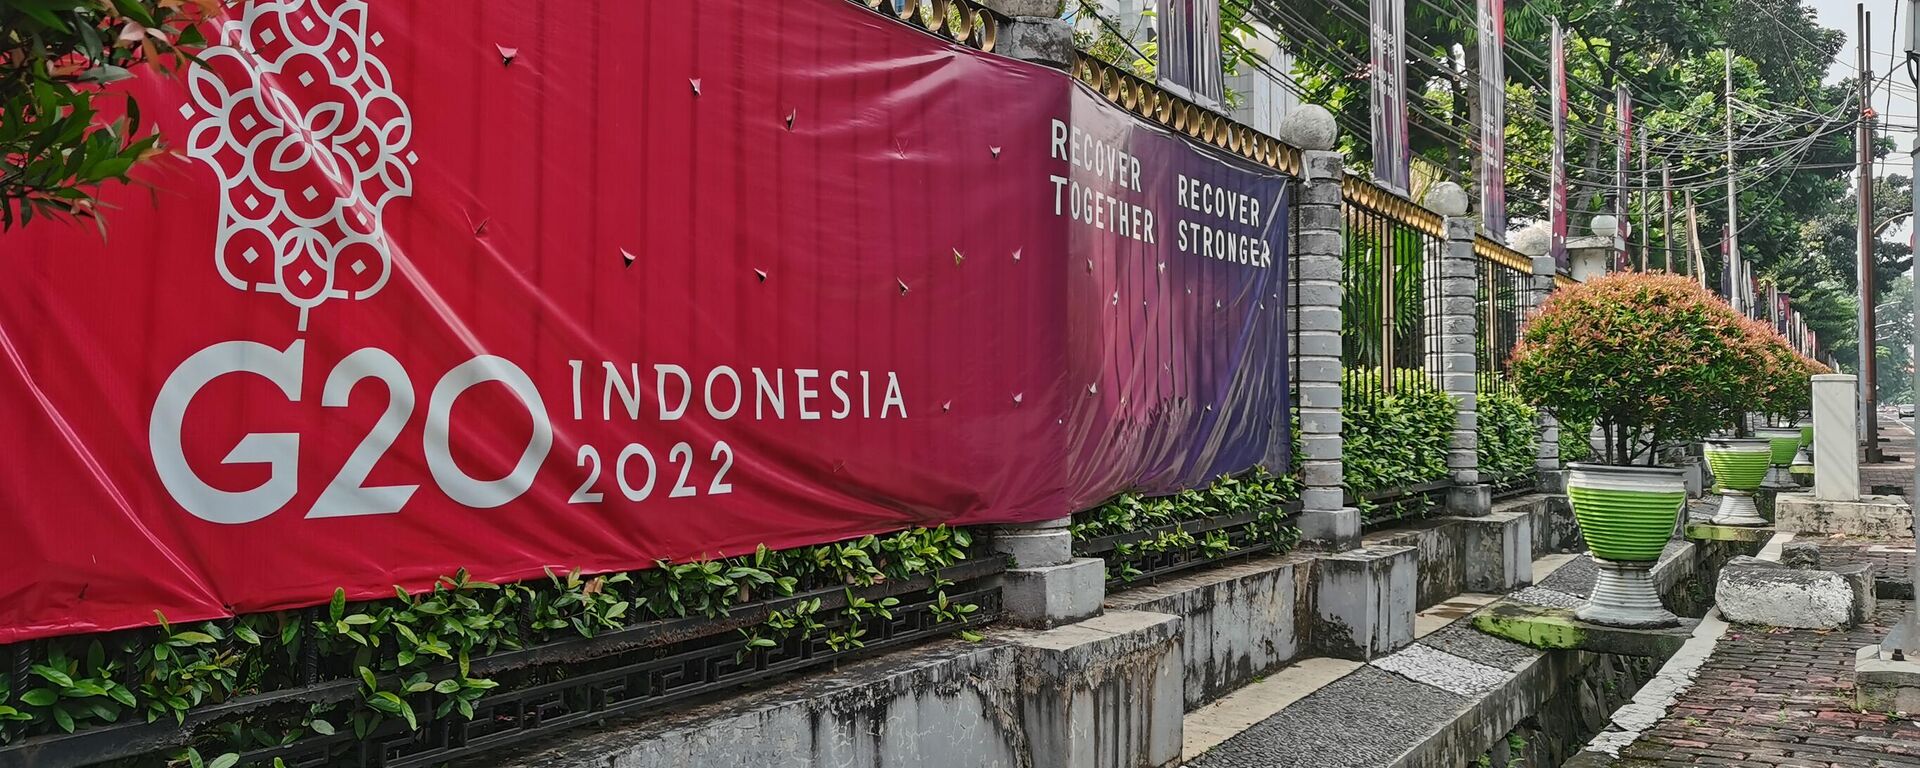 G20 Indonesia 2022 summit - Sputnik International, 1920, 17.05.2022